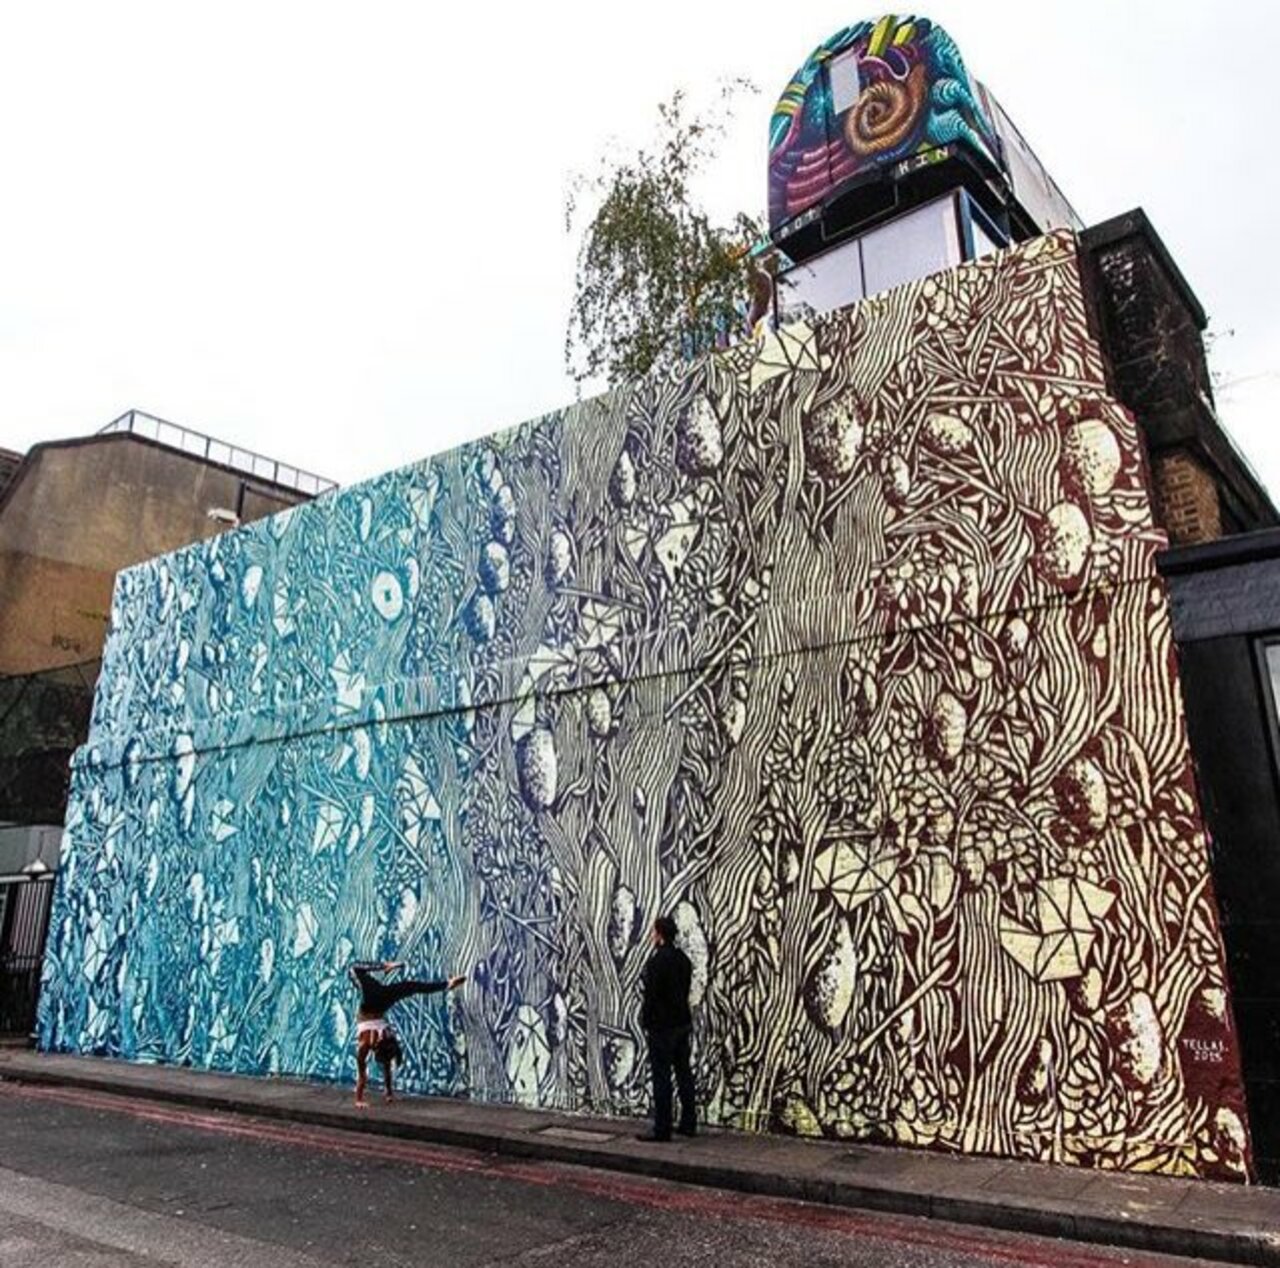 New Street Art by Tellas in Shoreditch London 

#art #graffiti #mural #streetart https://t.co/Fv7aWB828I